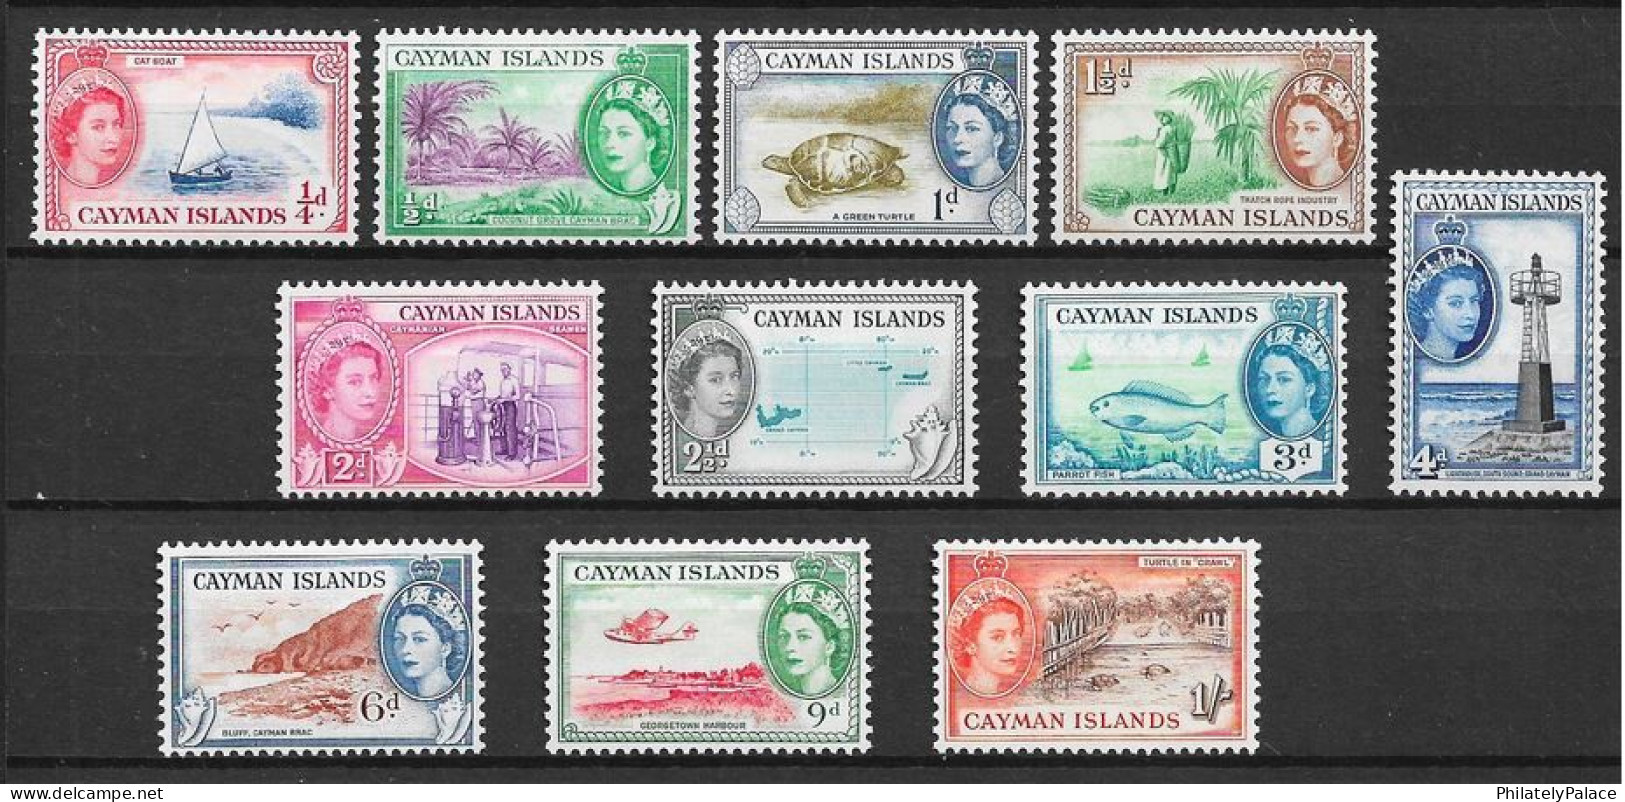 CAYMAN ISLANDS 1950 King George VI Pictorials, Bradbury Wilkinson Printings',Turtle,Boat,Map,Fish,Lighthouse,SET MNH(**) - Cayman Islands